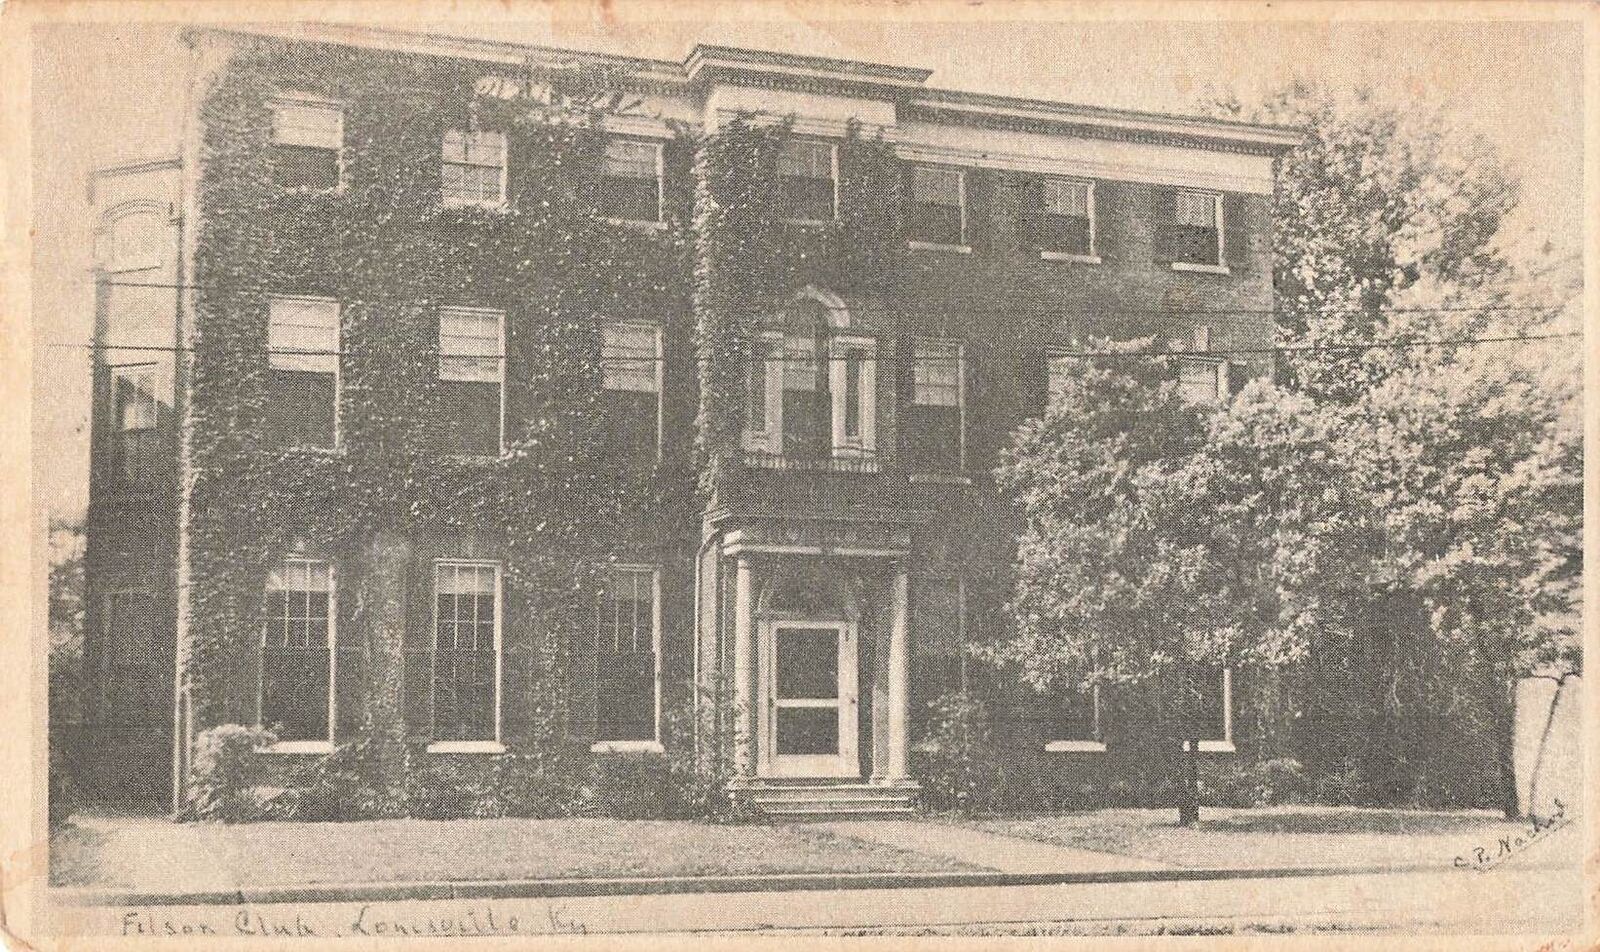 Vintage Postcard Exterior View Filson Club, Louisville, Kentucky 